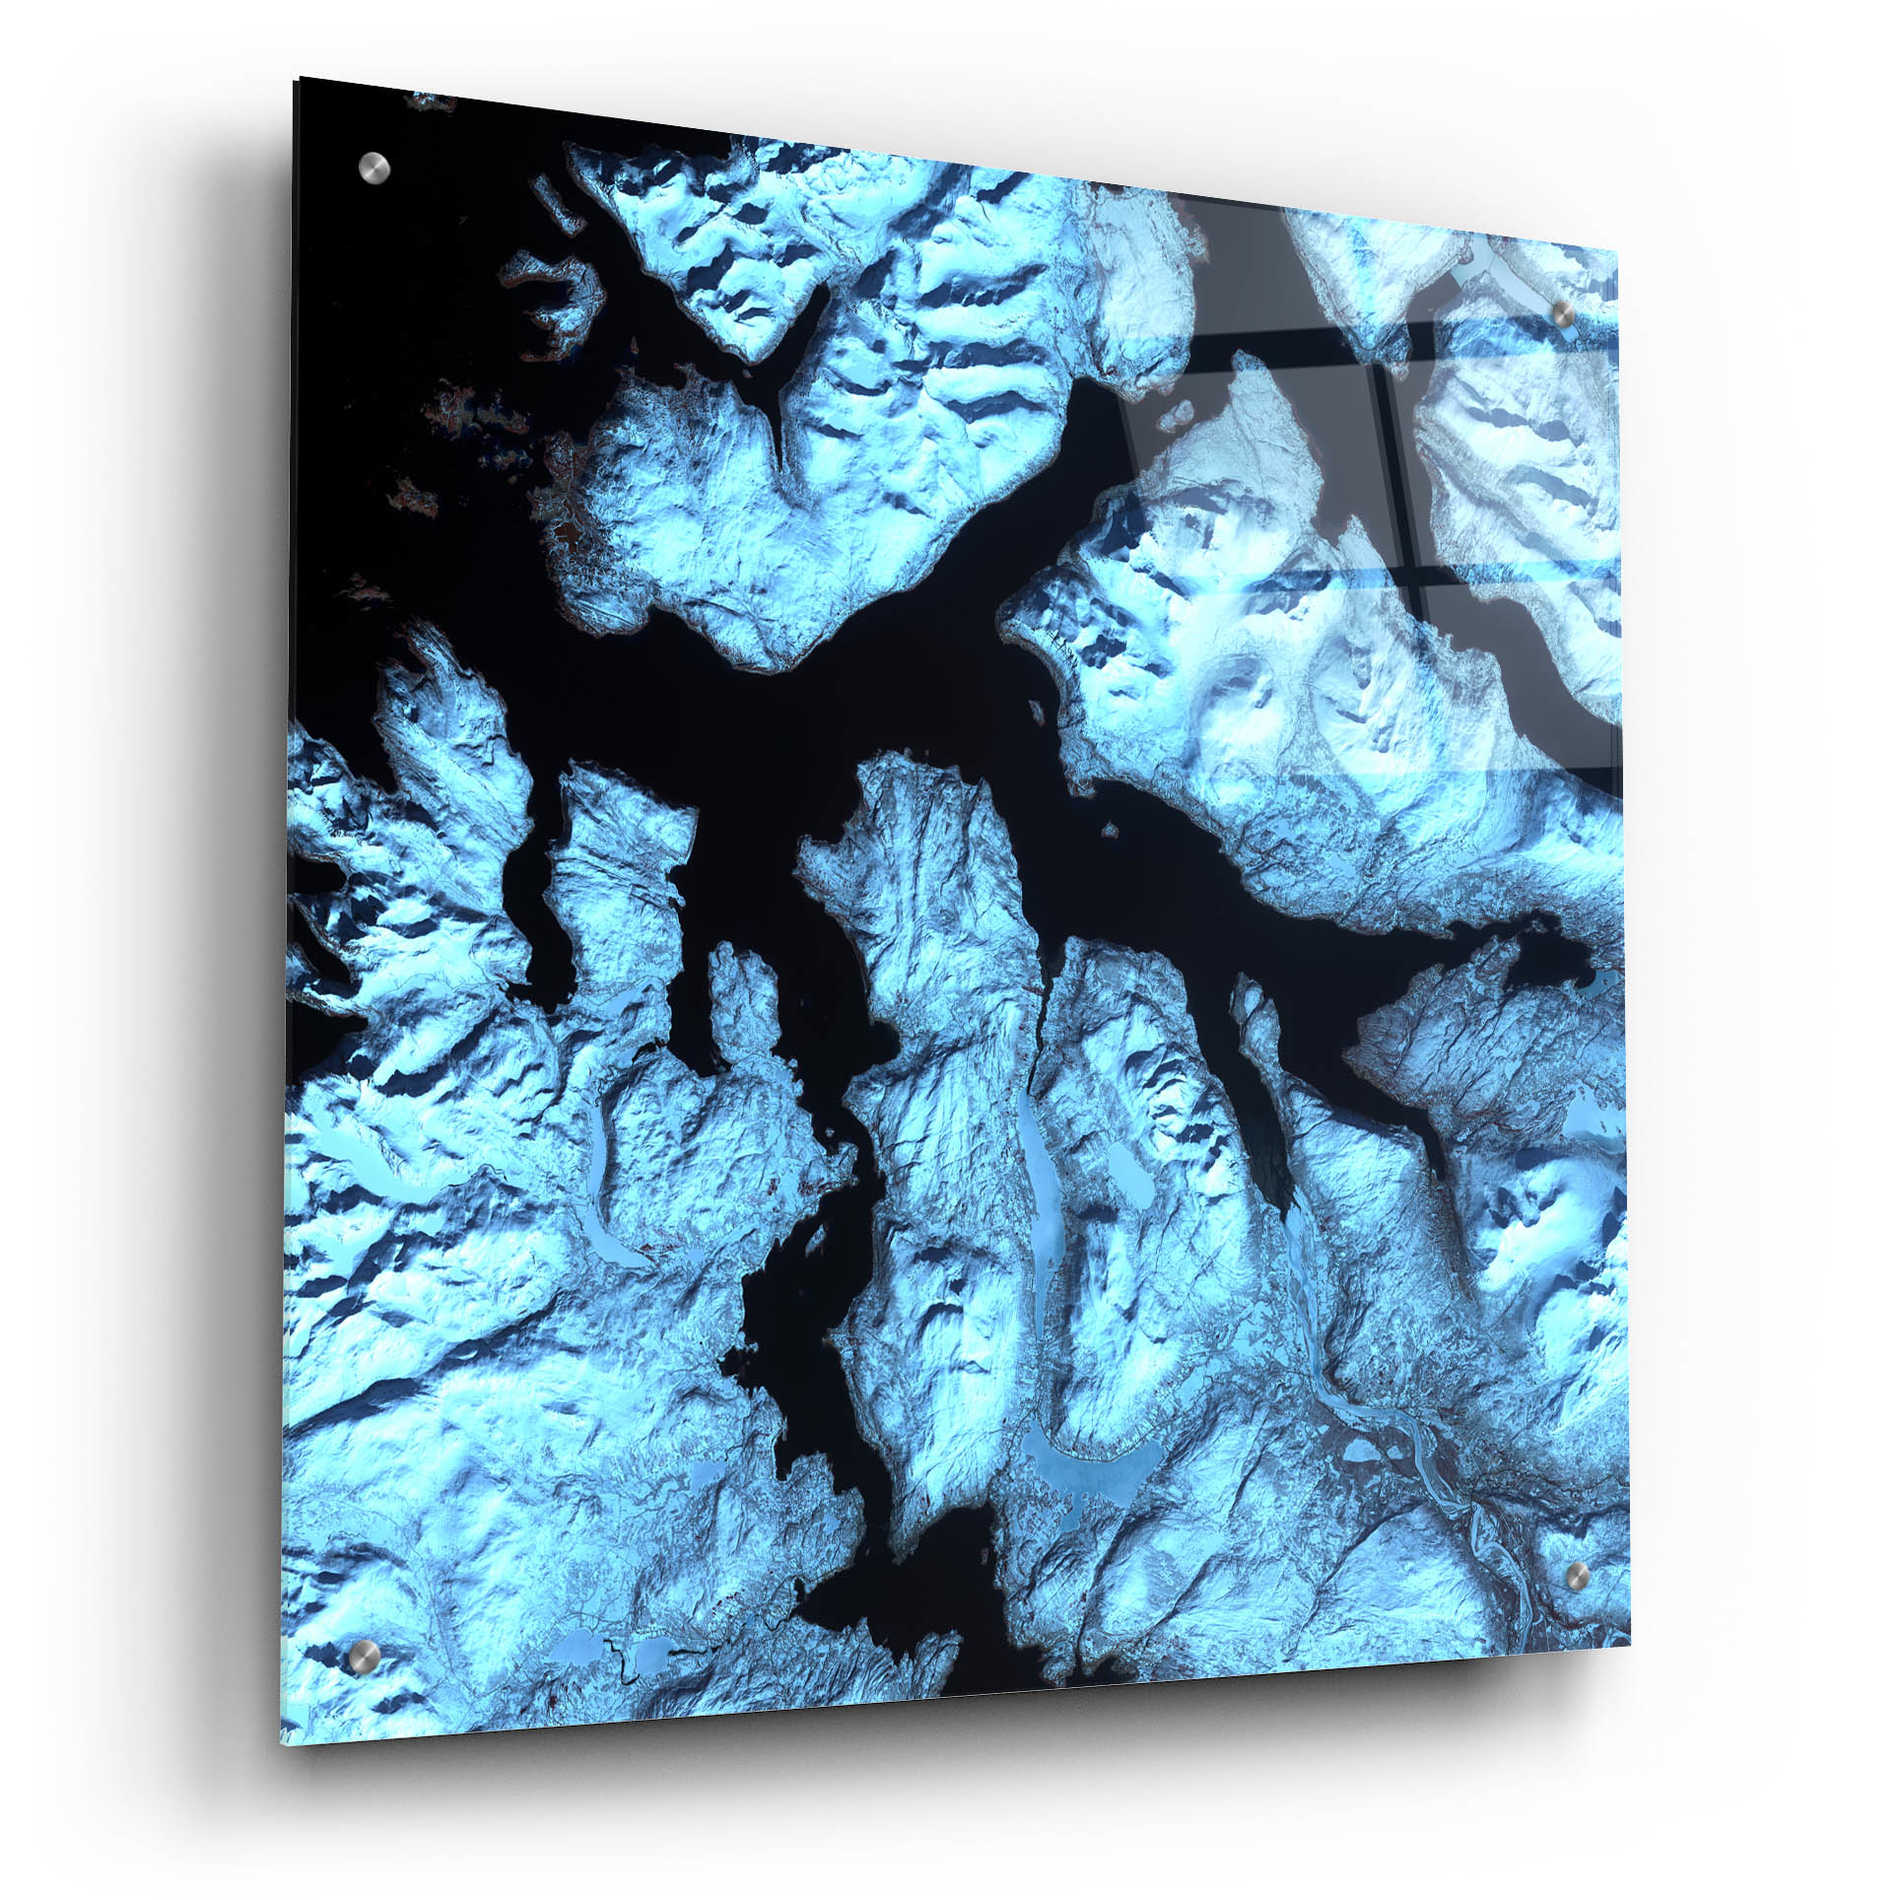 Epic Art 'Earth as Art: Northern Norway' Acrylic Glass Wall Art,24x24